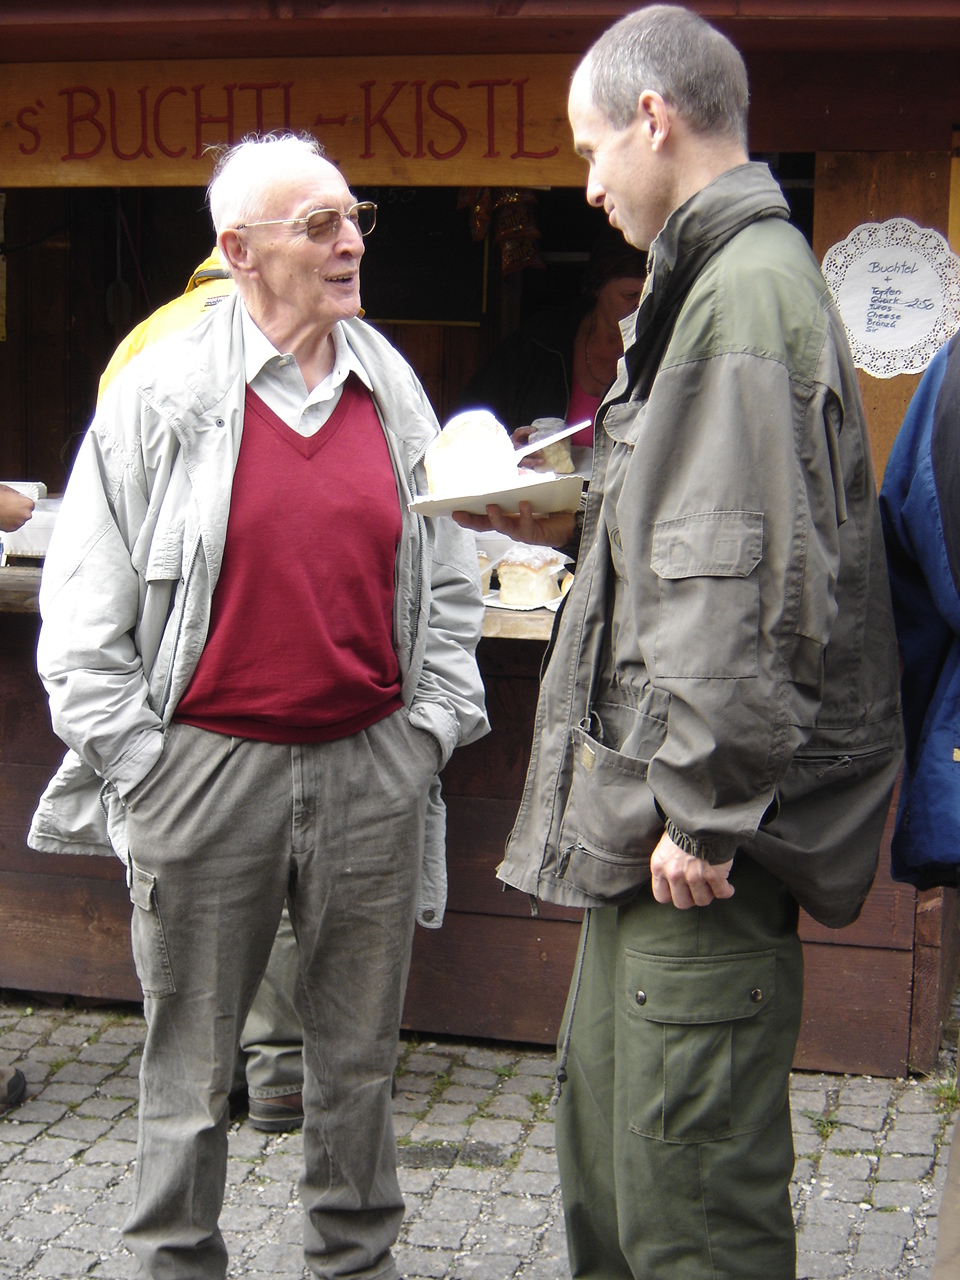 Jiří Danihelka with professor Ehrendorfer